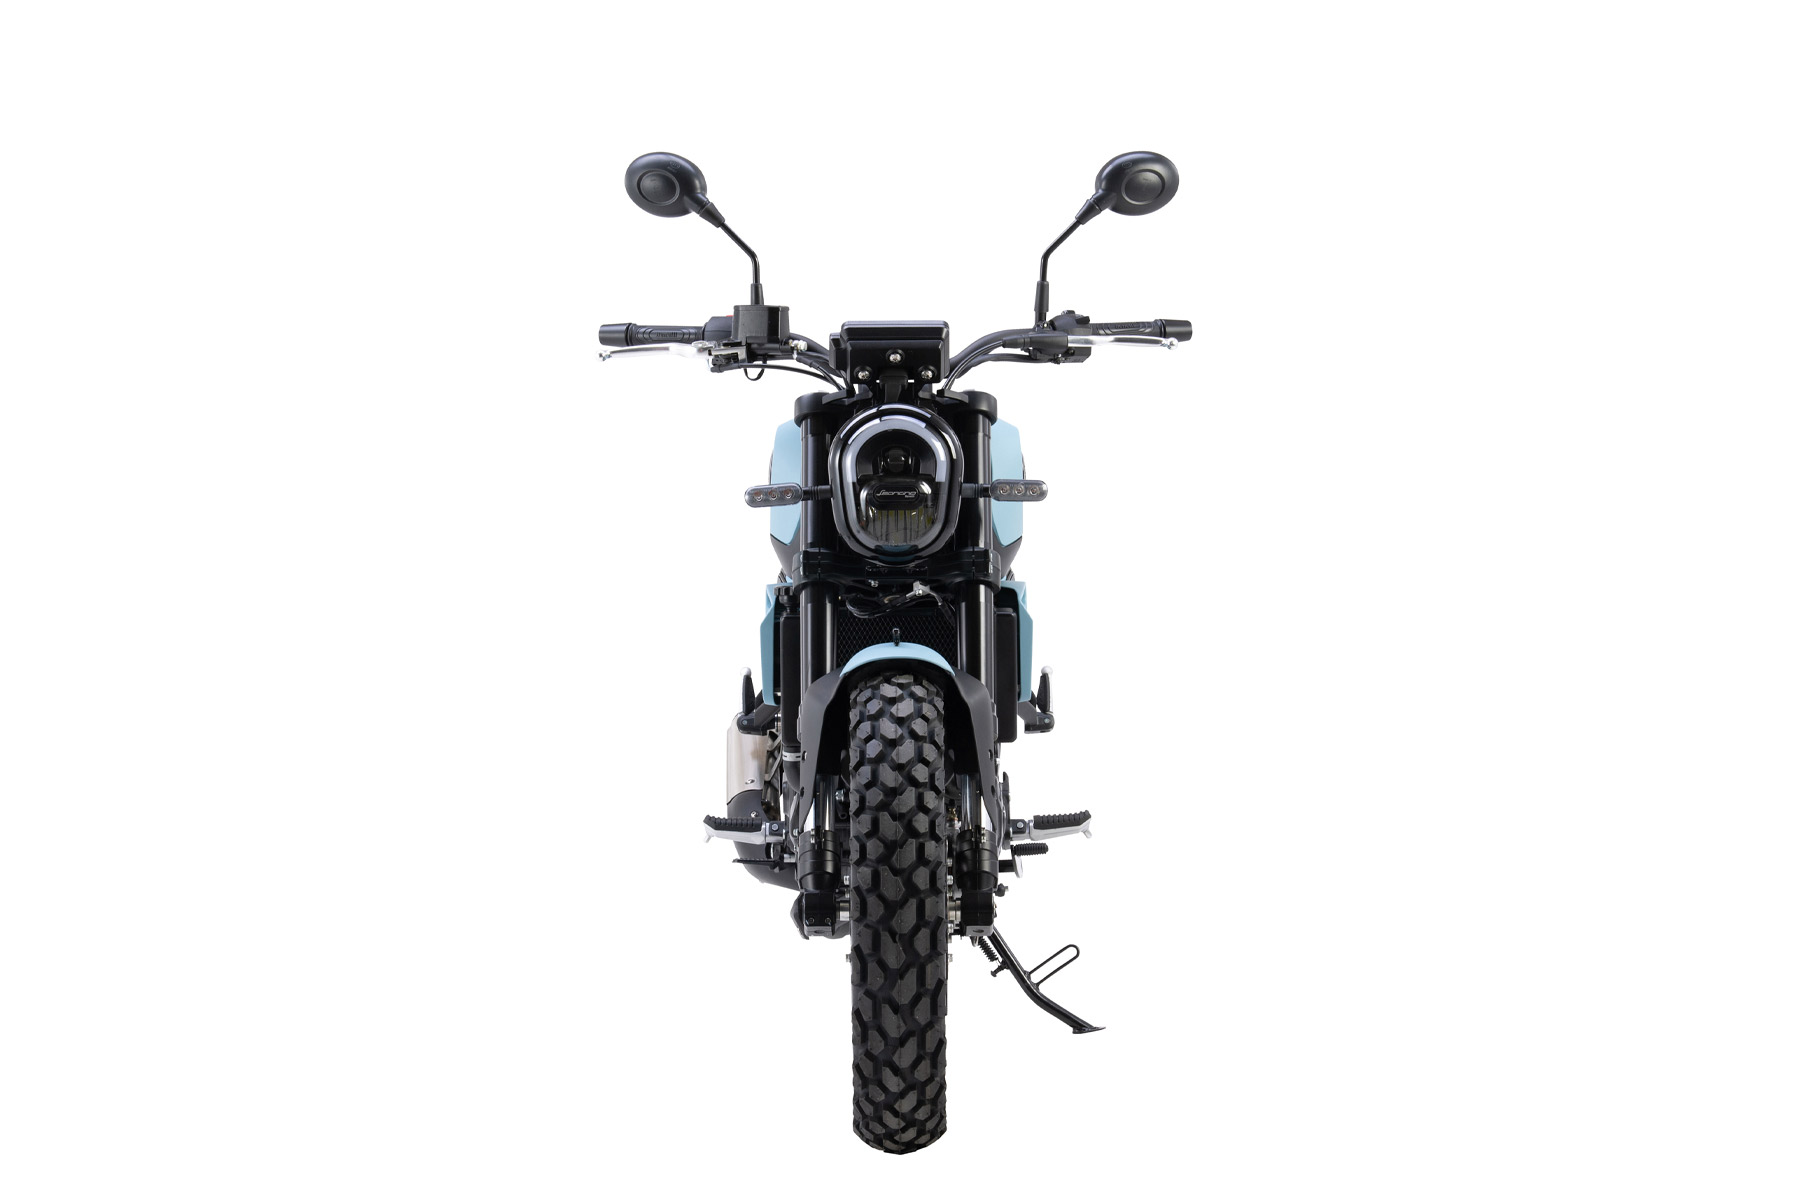 LEONCINO 250 CUSTOM | イタリア生まれのバイク「ベネリ」輸入元プロト